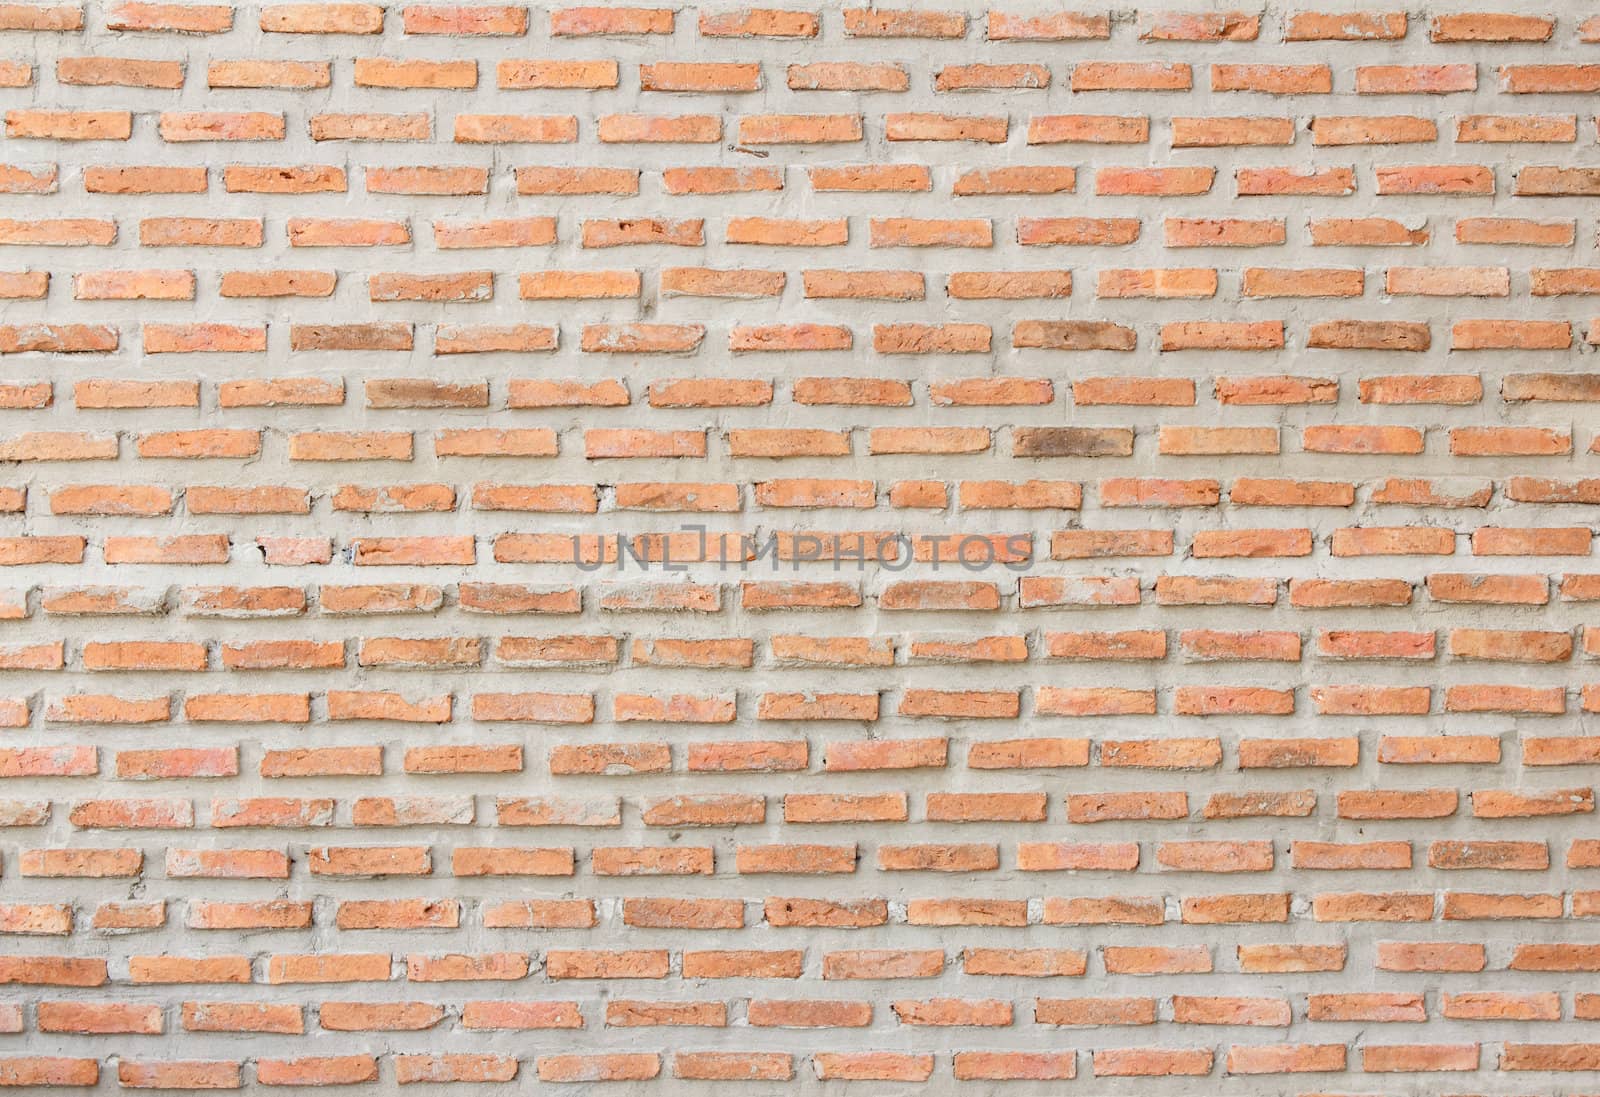 Brick wall background by vitawin